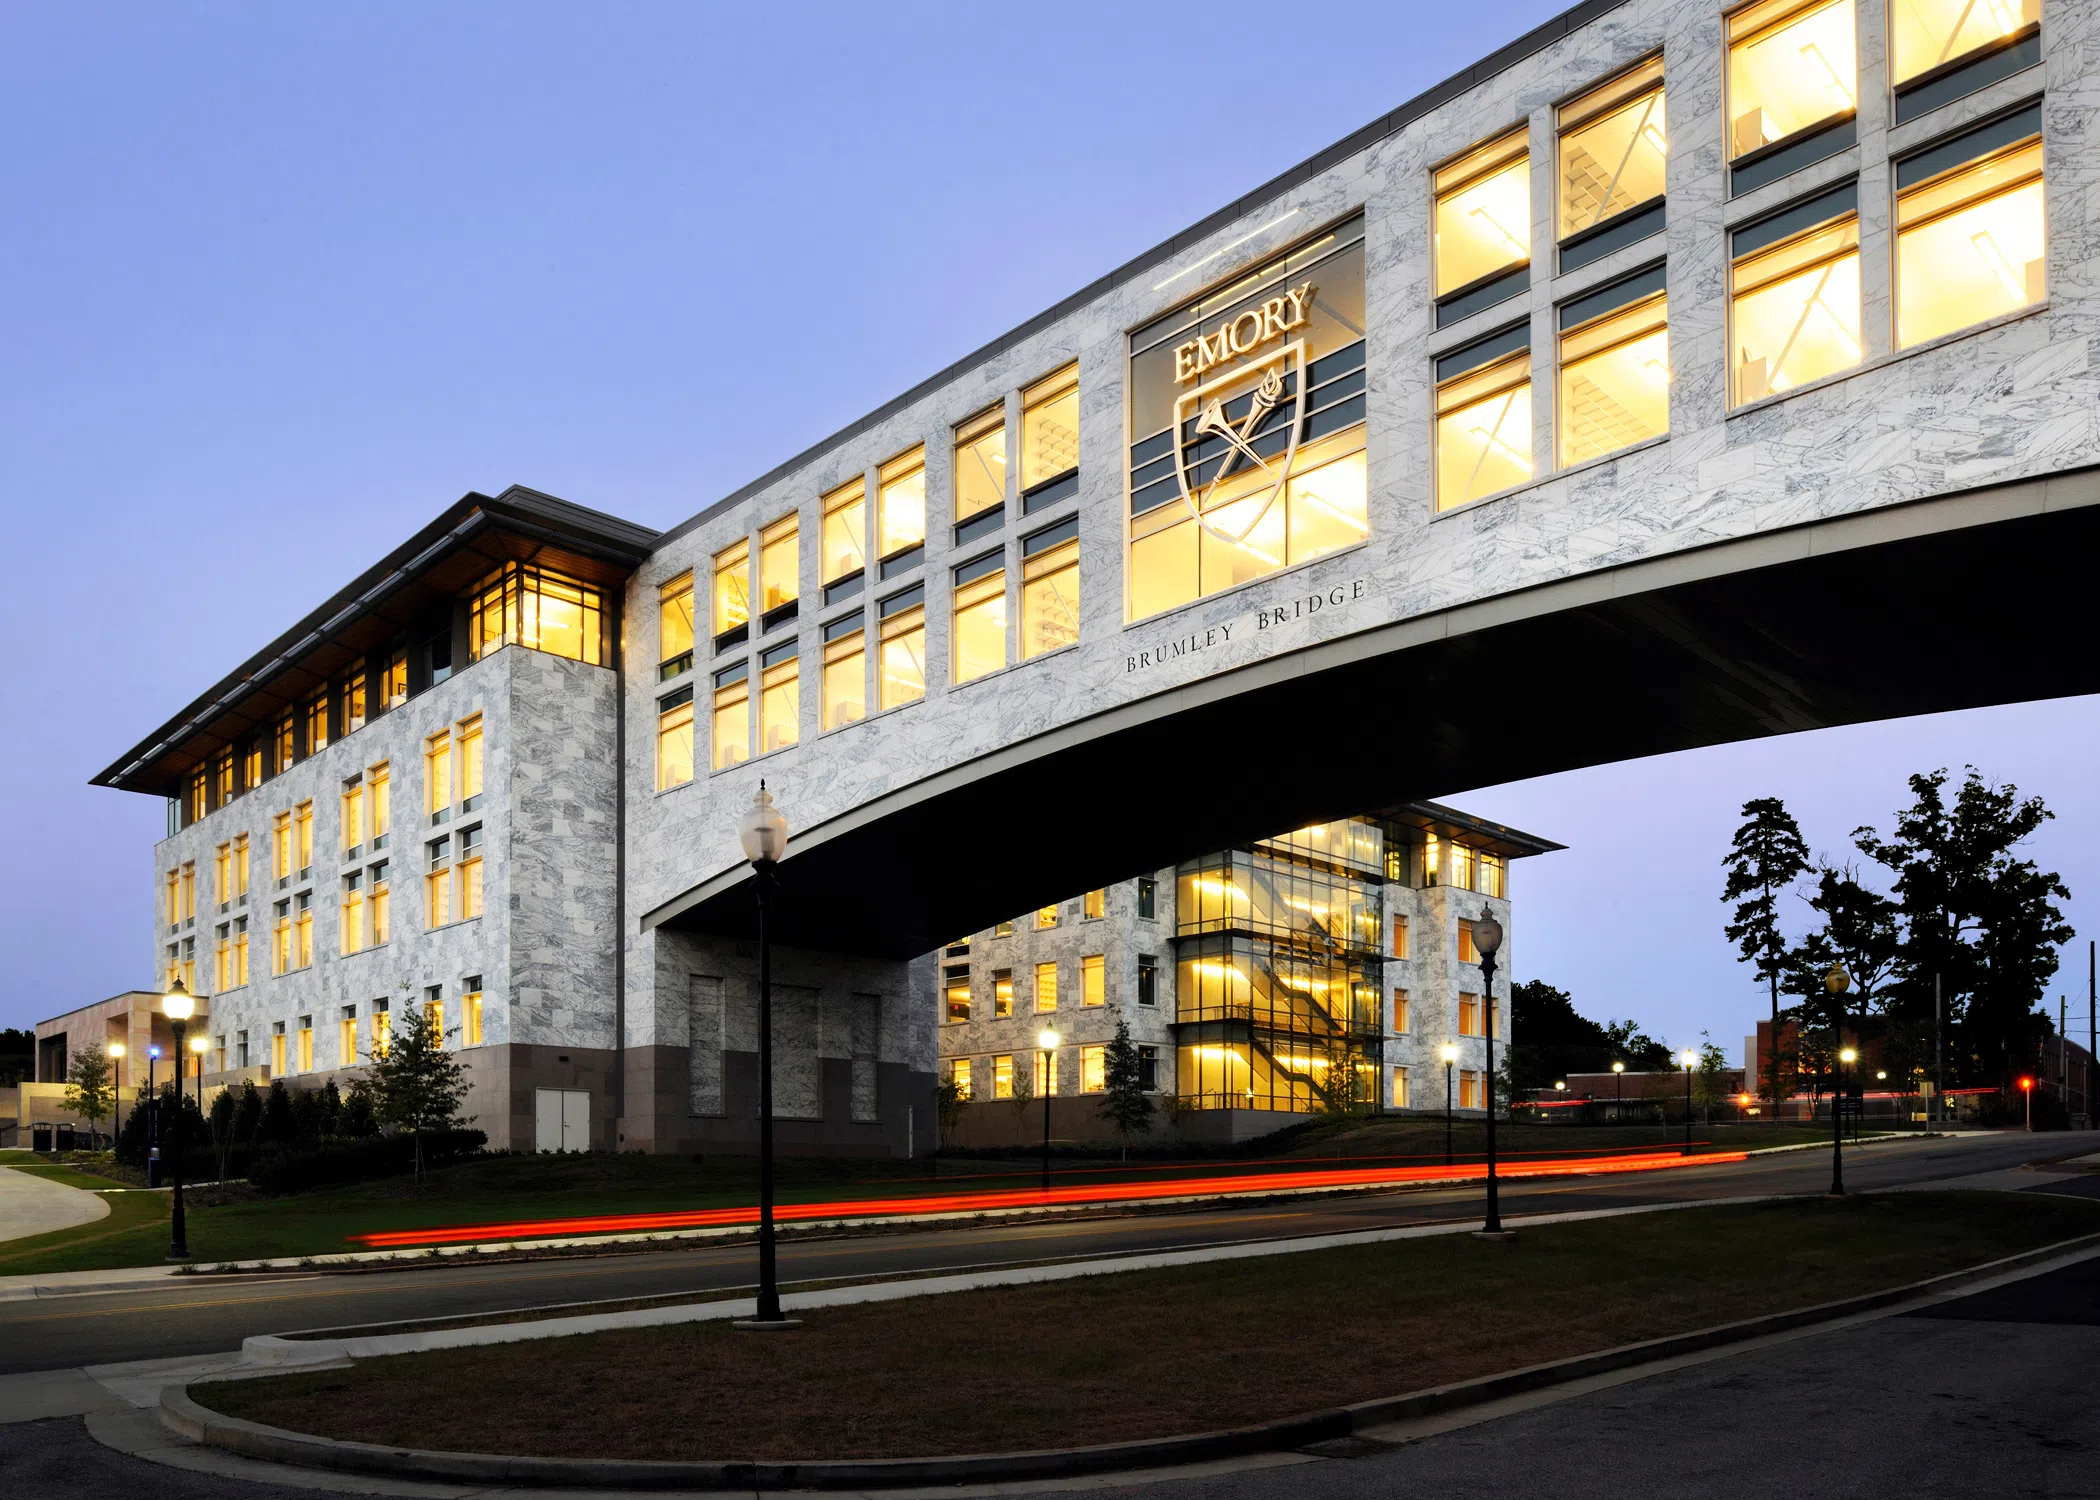 The Emory University Campus